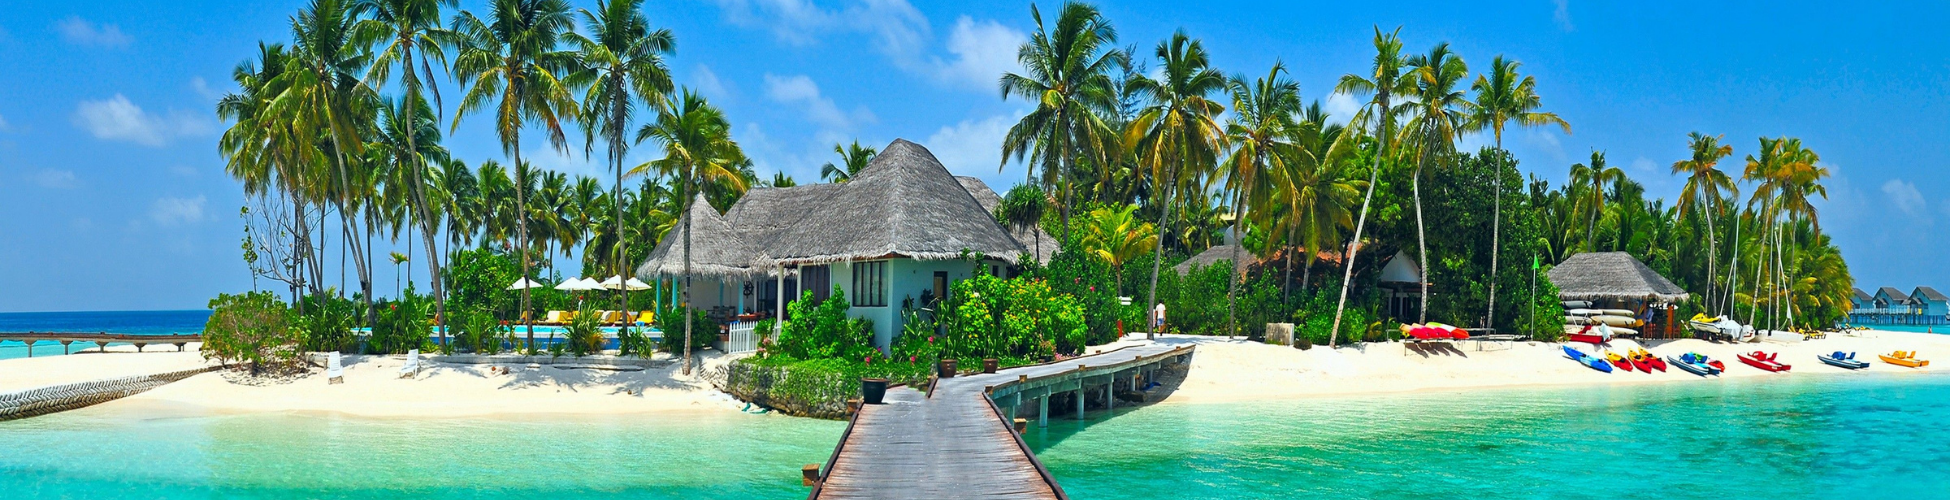 Paradise Island Resort & Spa Maldives tour package